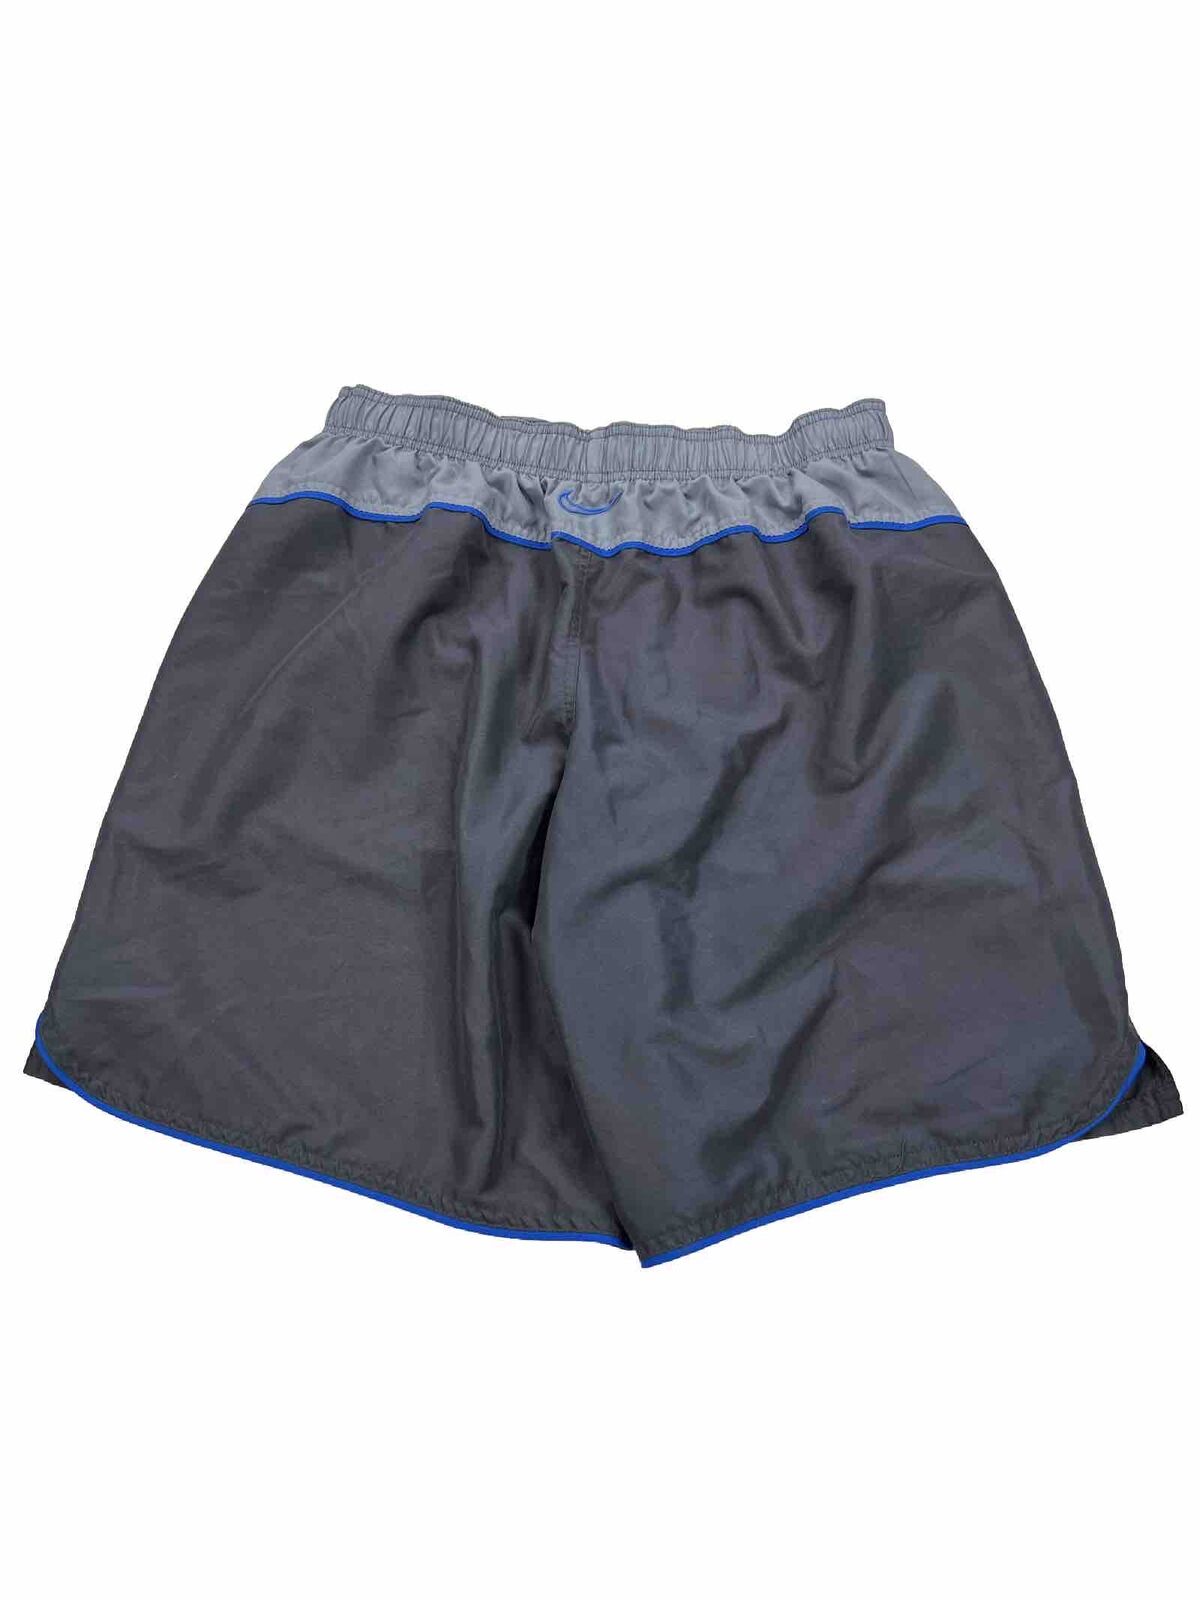 Nike Men's Gray Mesh Lined Swim Trunks Shorts - XL